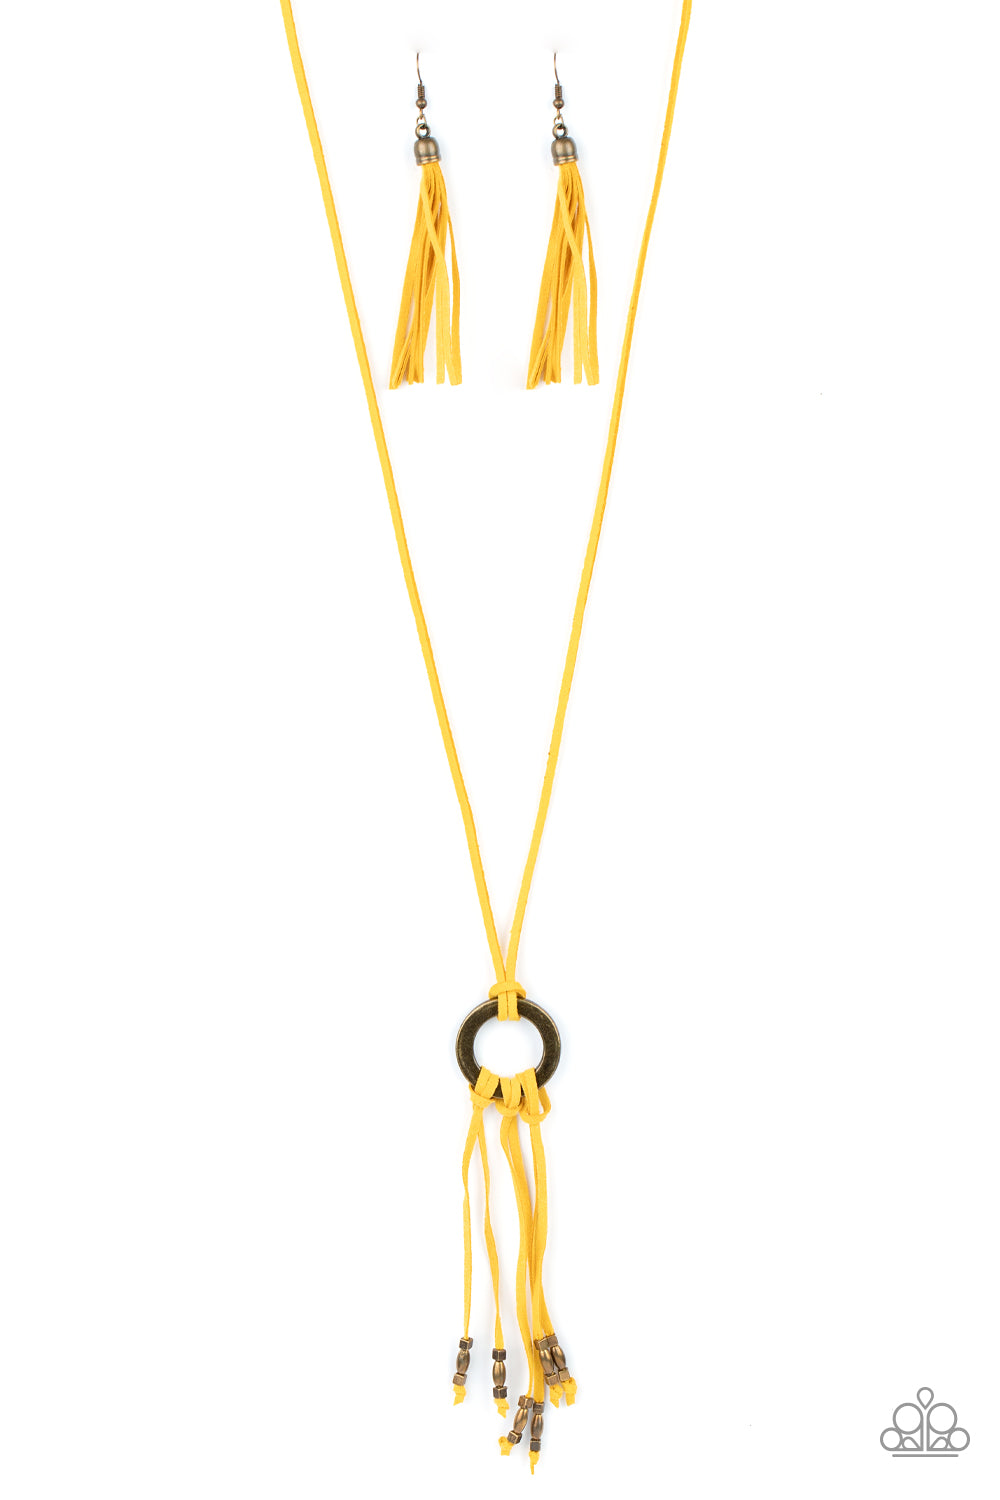 Feel at HOMESPUN - Yellow Necklace